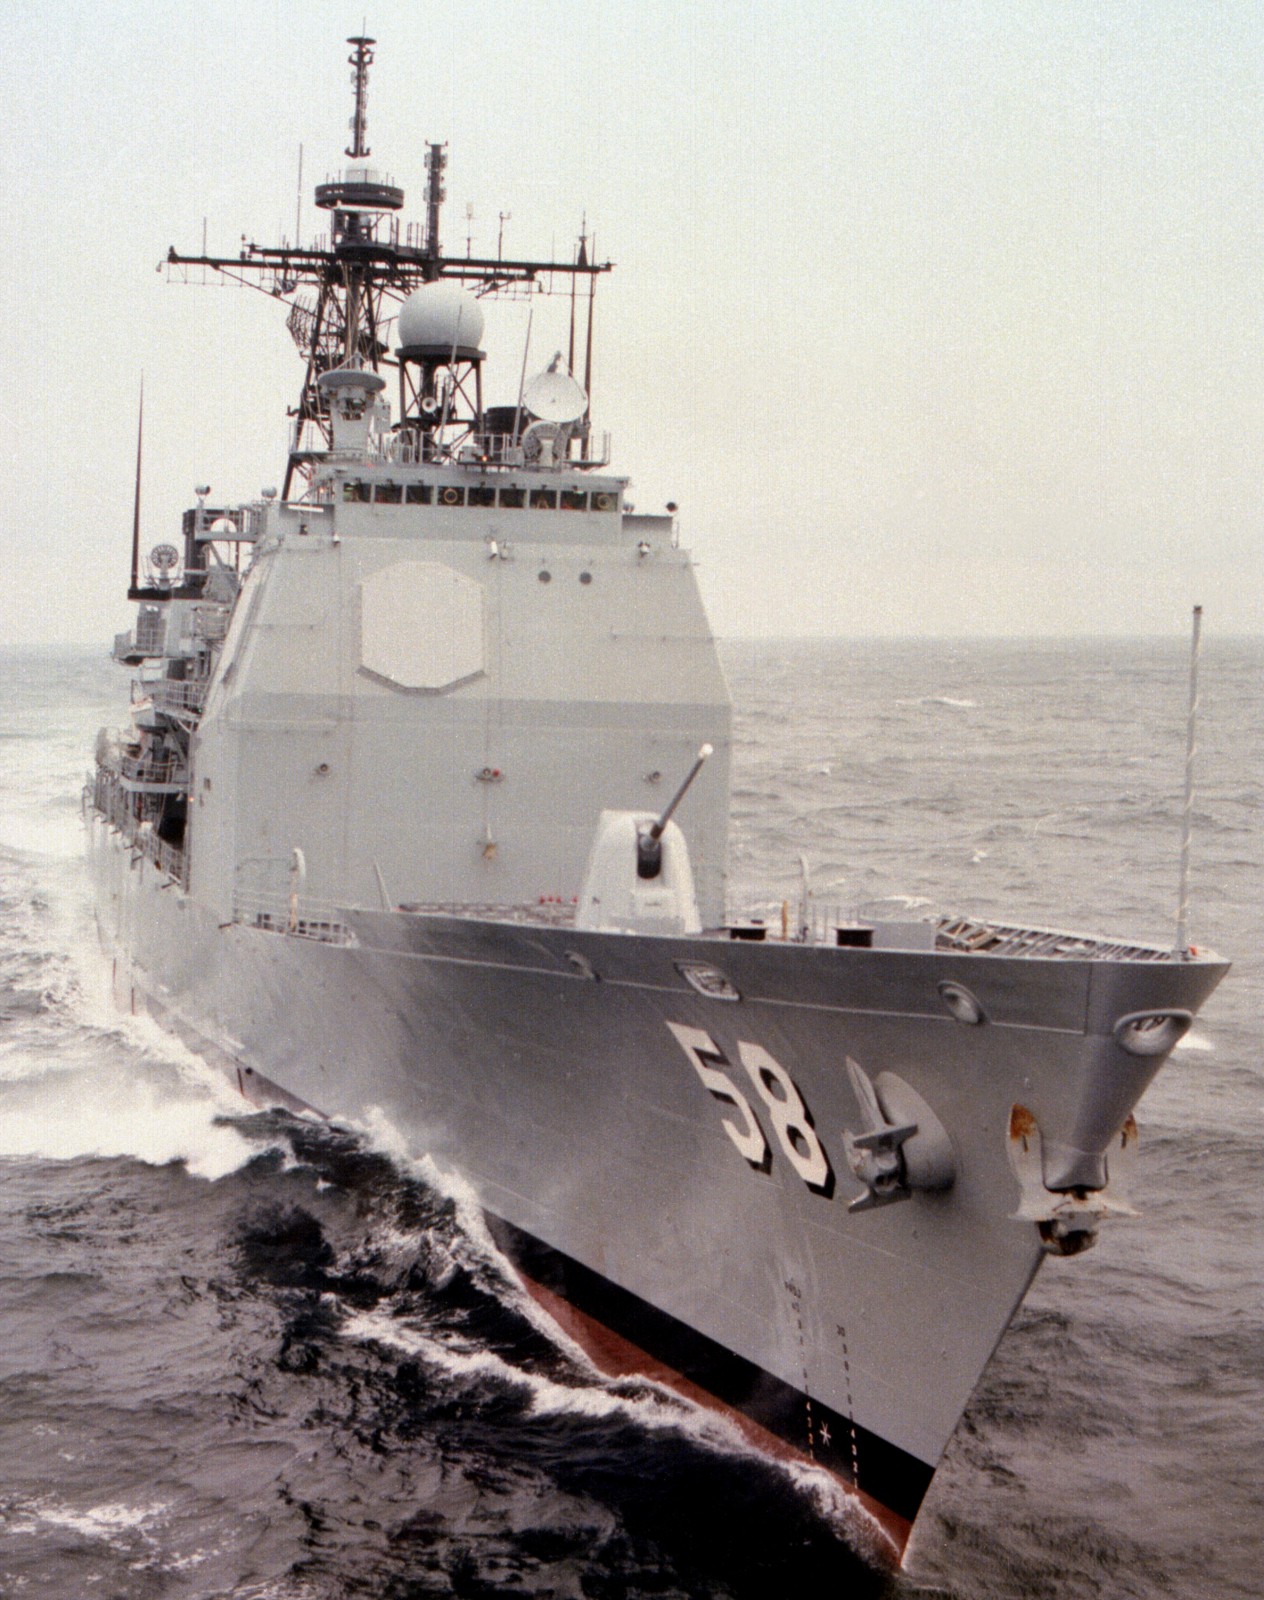 cg-58 uss philippine sea ticonderoga class guided missile cruiser aegis us navy trials bath iron works maine 72